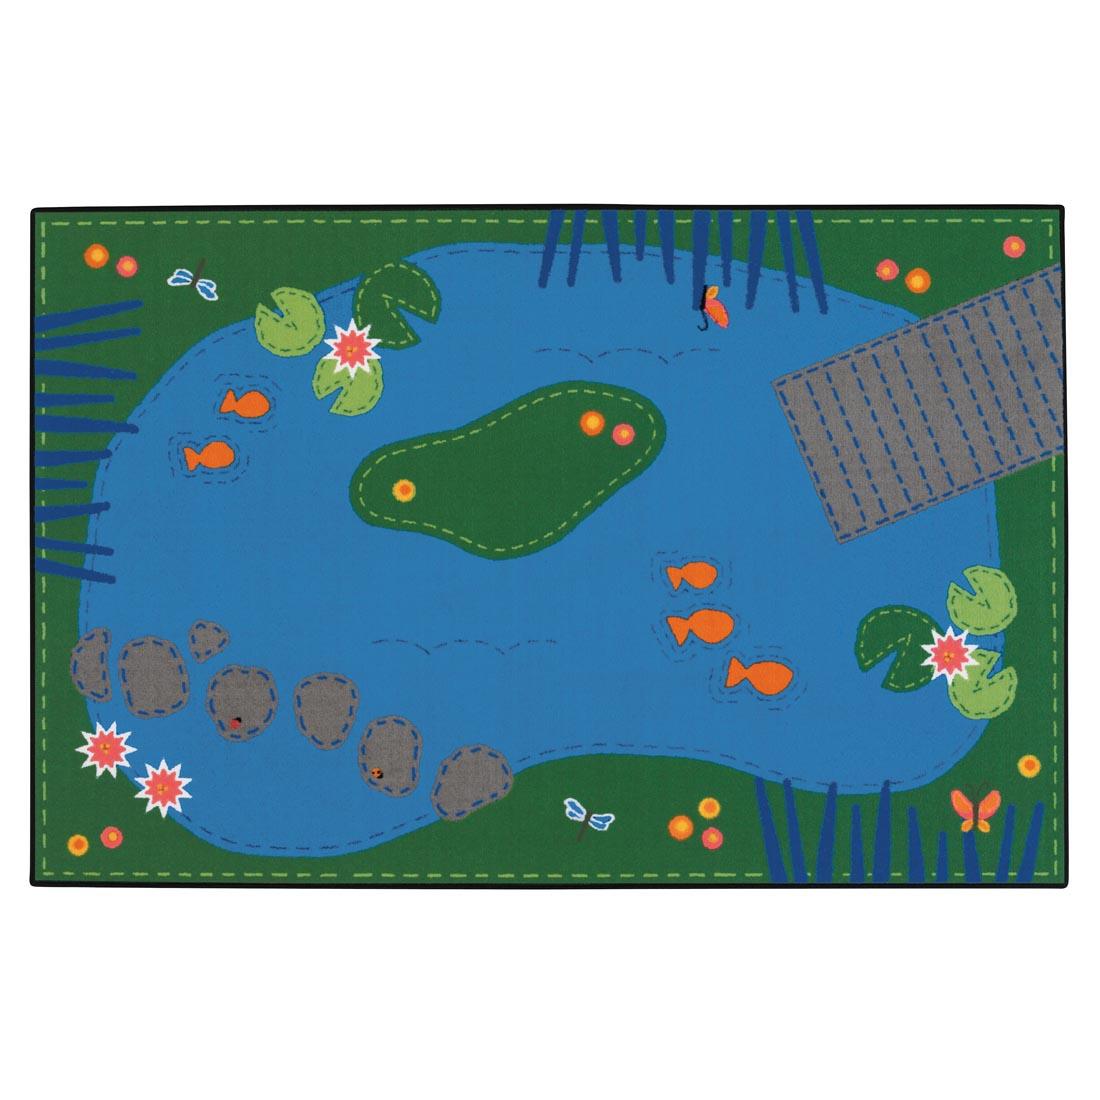 Tranquil Pond Kids Value Plus Rug by Carpets For Kids